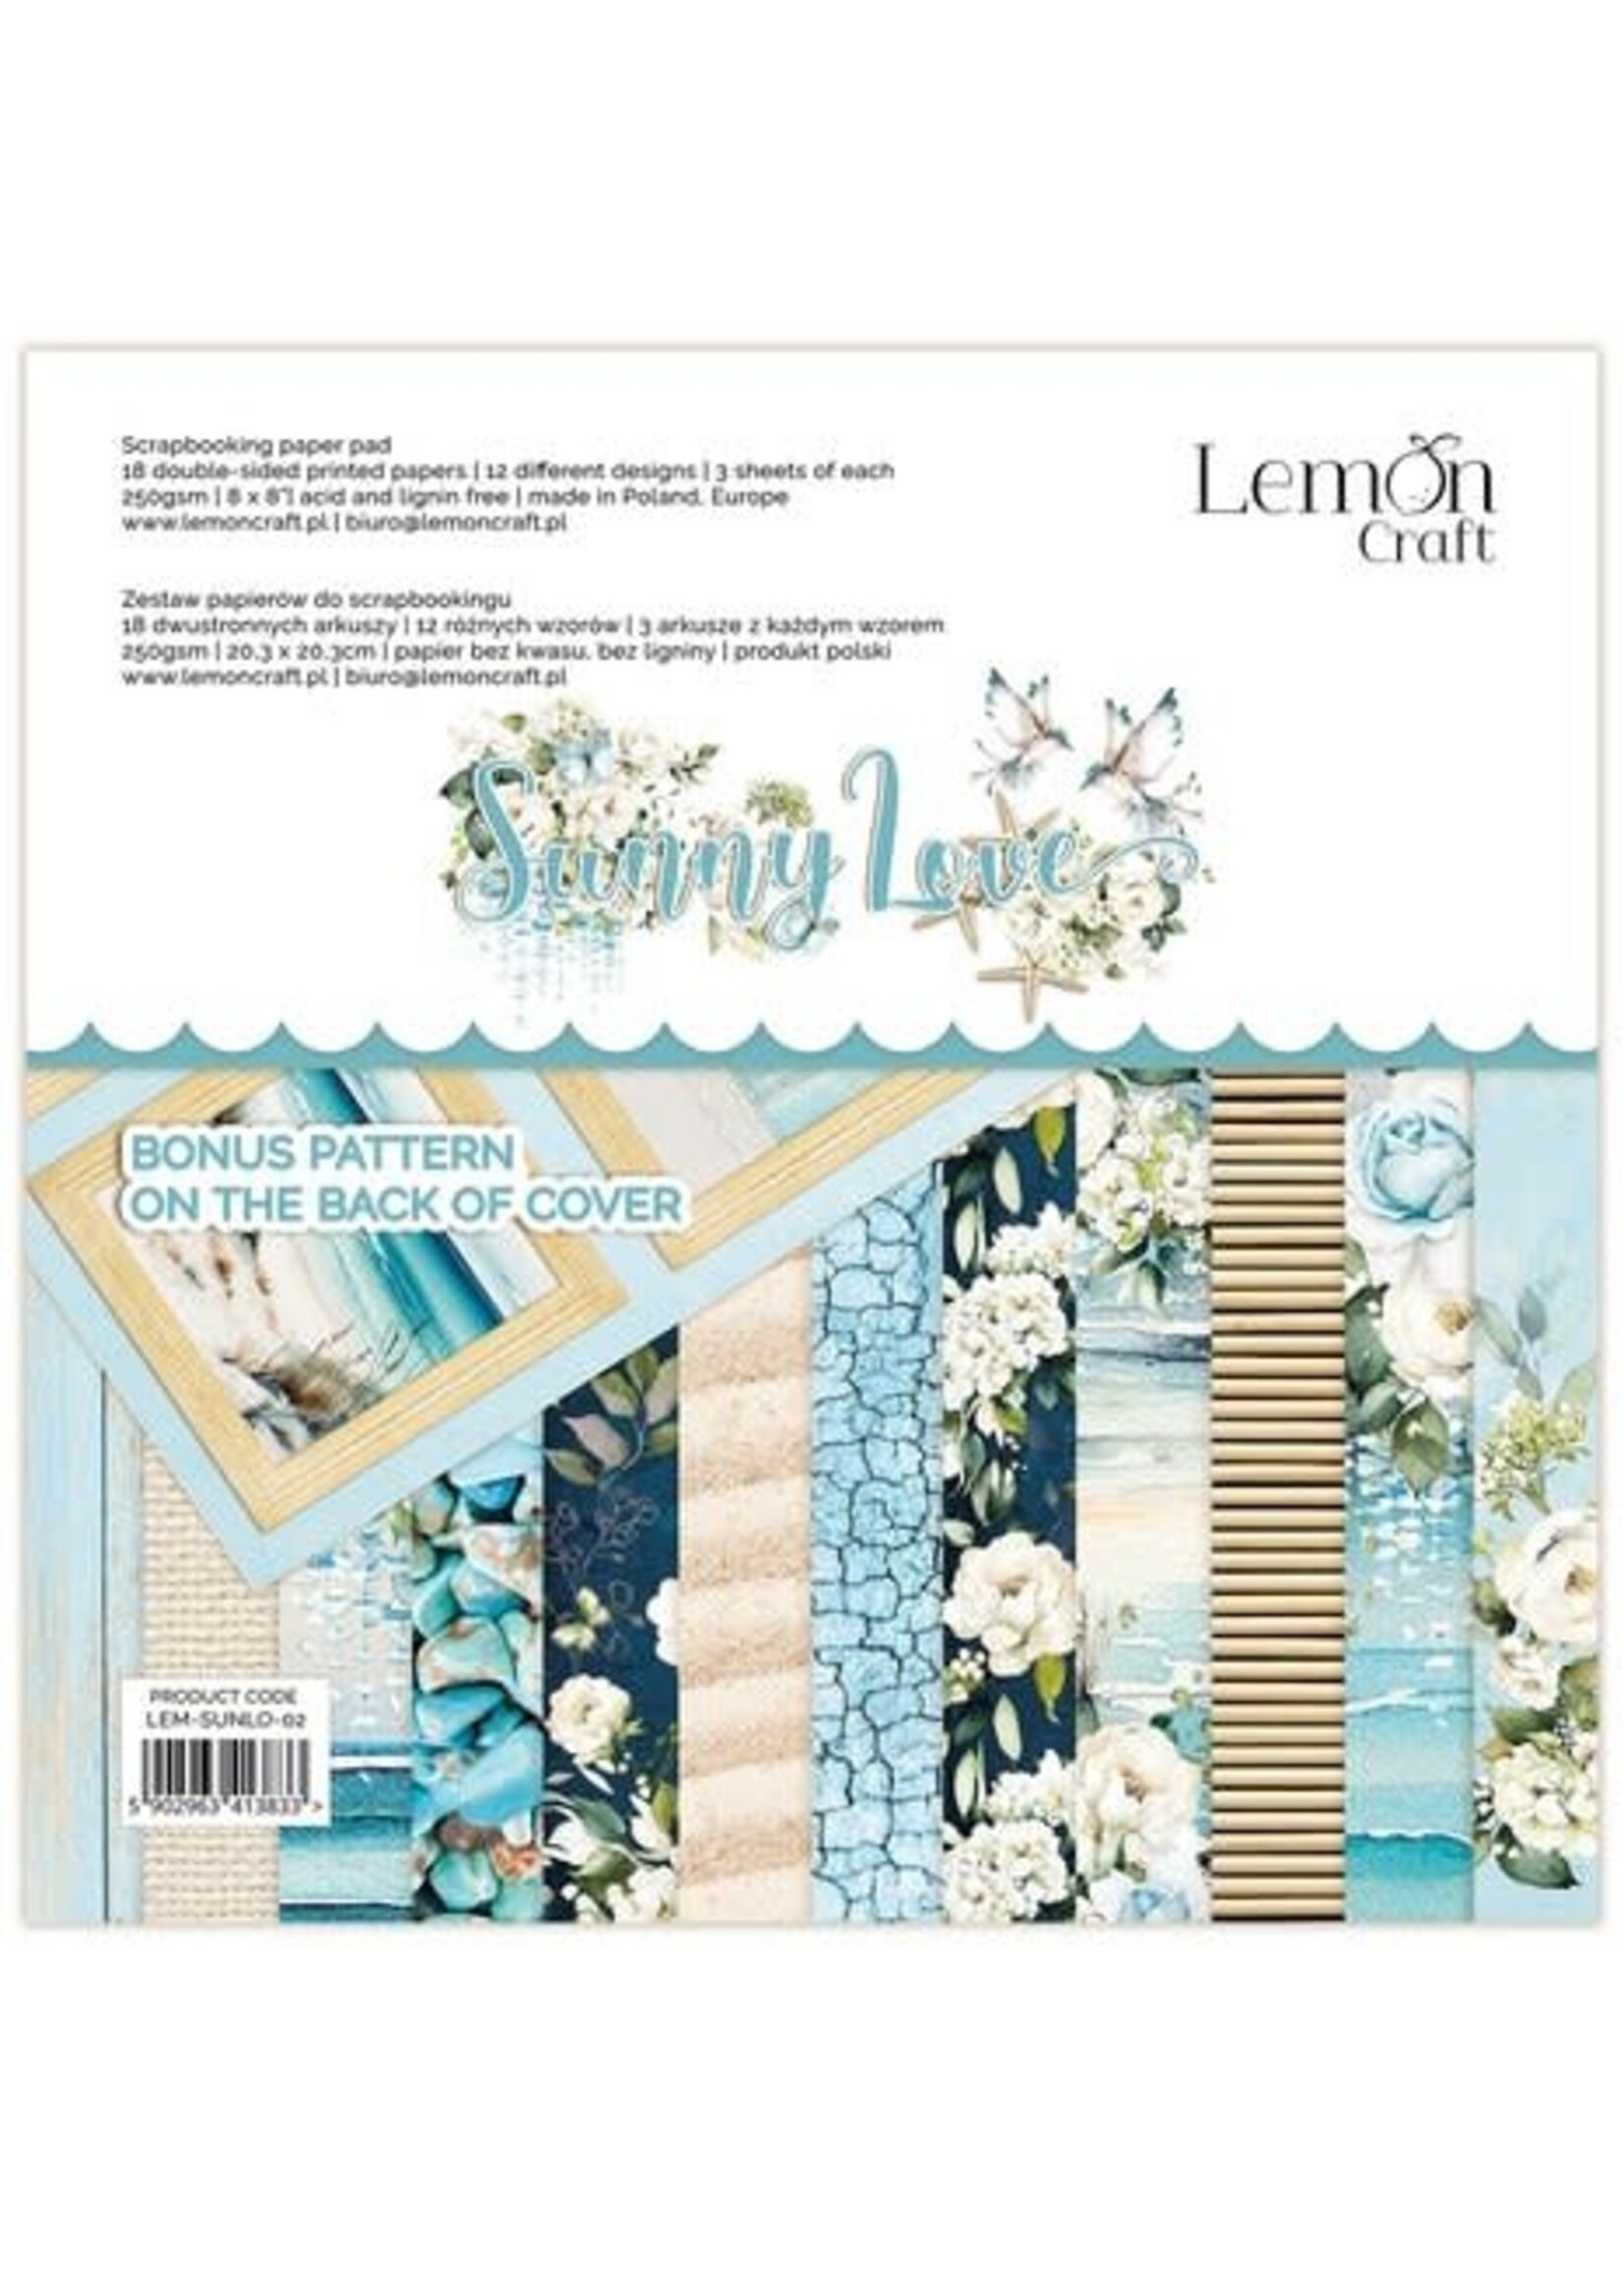 Lemon Craft Sunny Love 8x8 Inch Paper Pad (LEM-SUNLO-02)